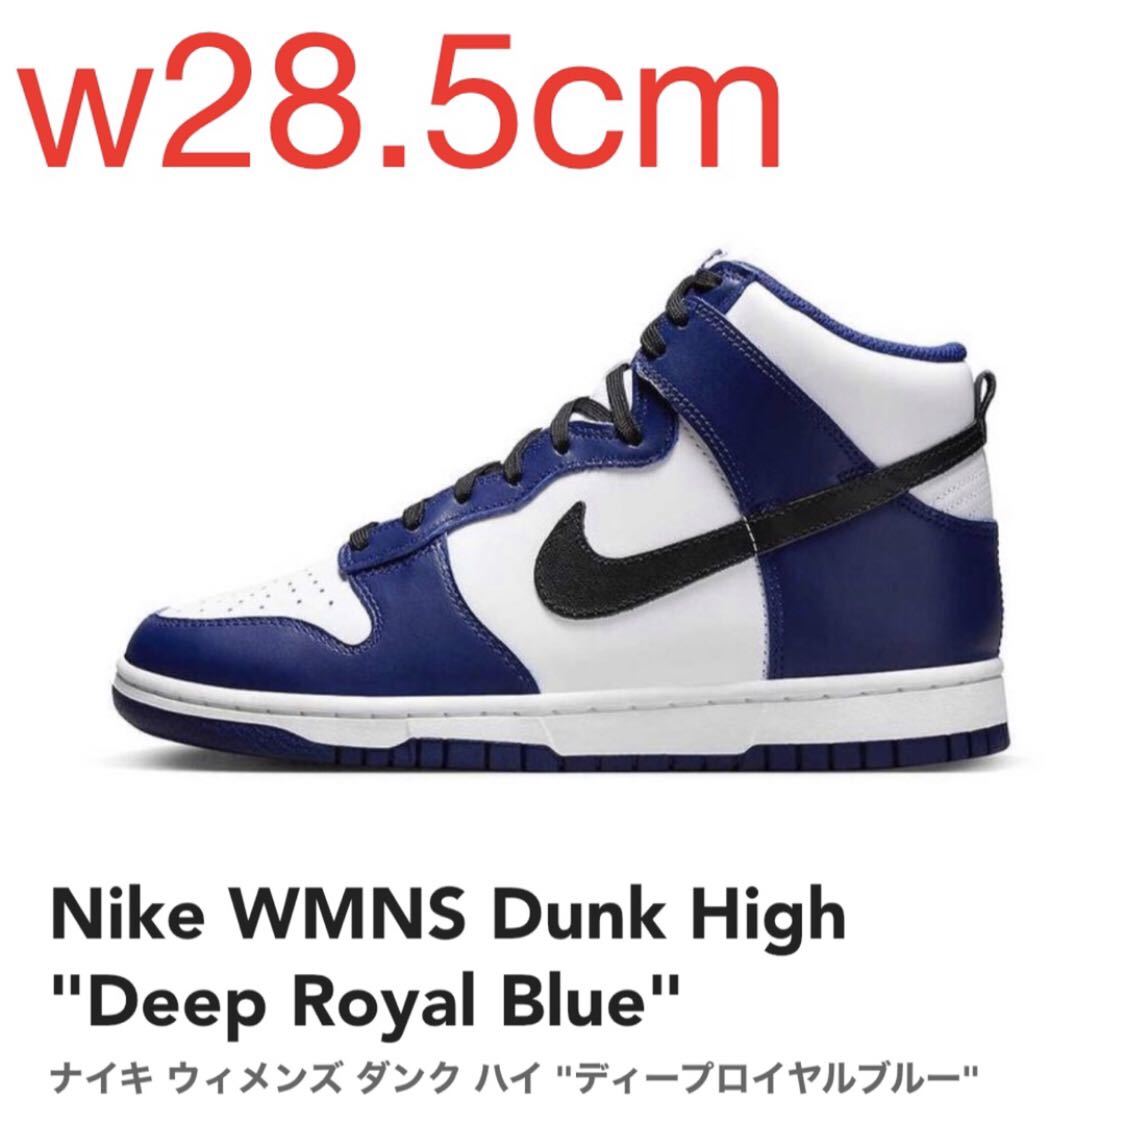 Nike WMNS Dunk High Deep Royal Blue ナイキ ウィメンズ ダンク ハイ ディープロイヤルブルー DD1869-400 w28.5cm US11.5w 新品